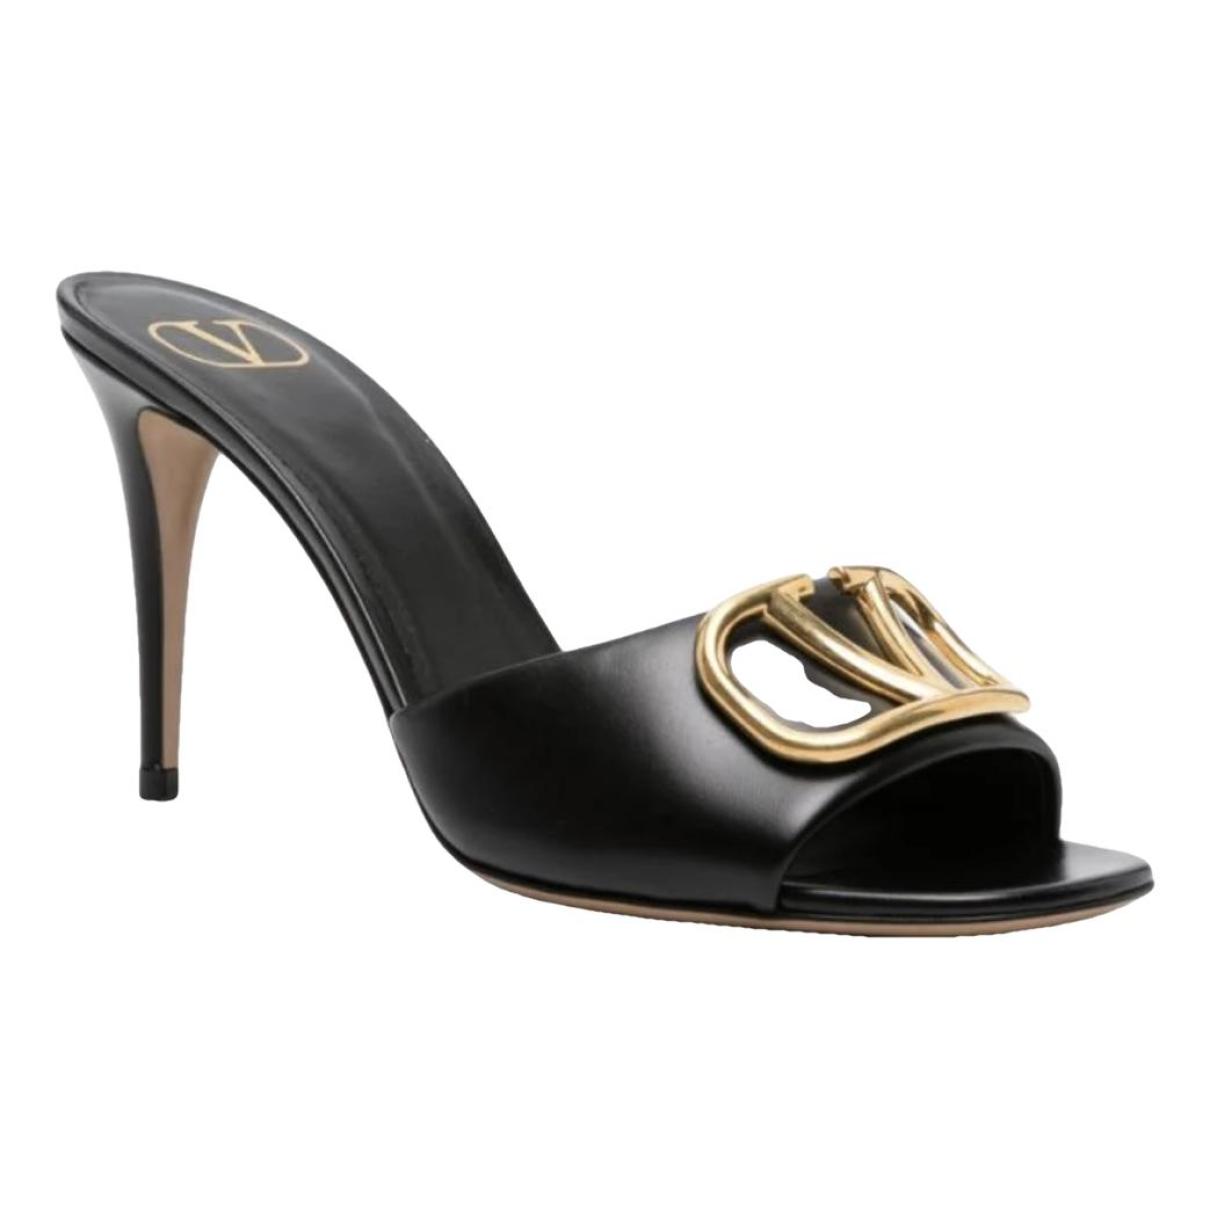 VLogo leather heels - 1